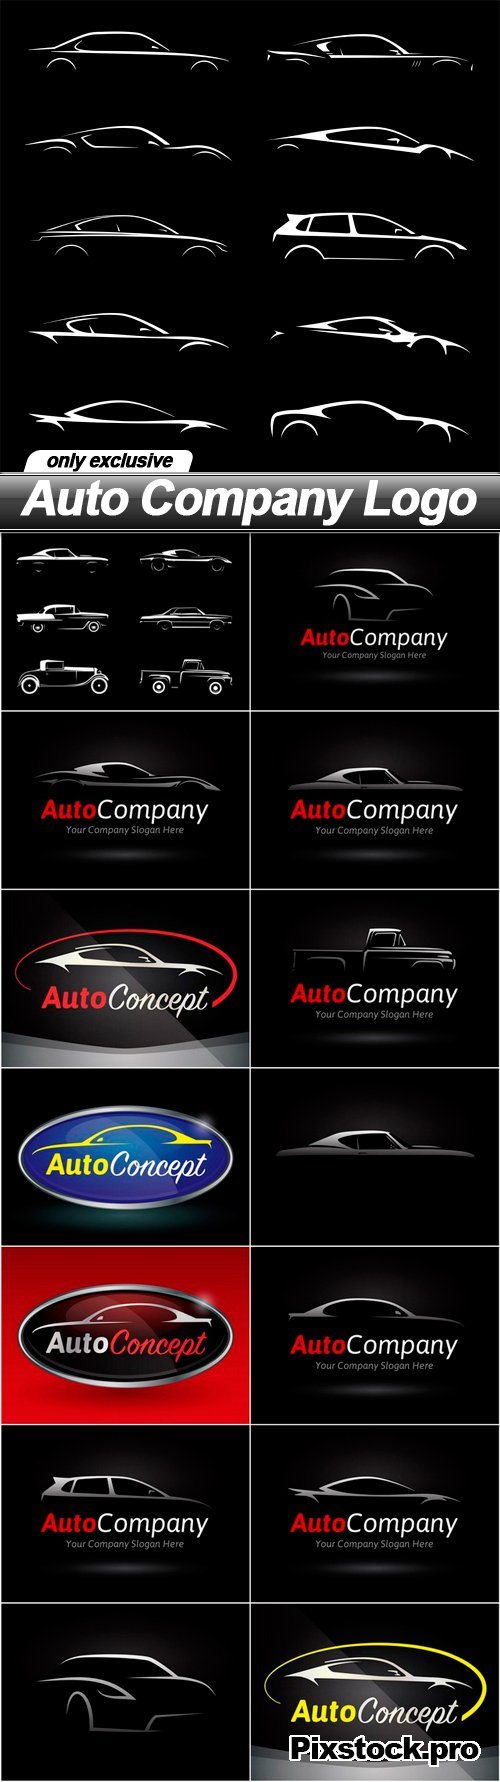 Auto Company Logo